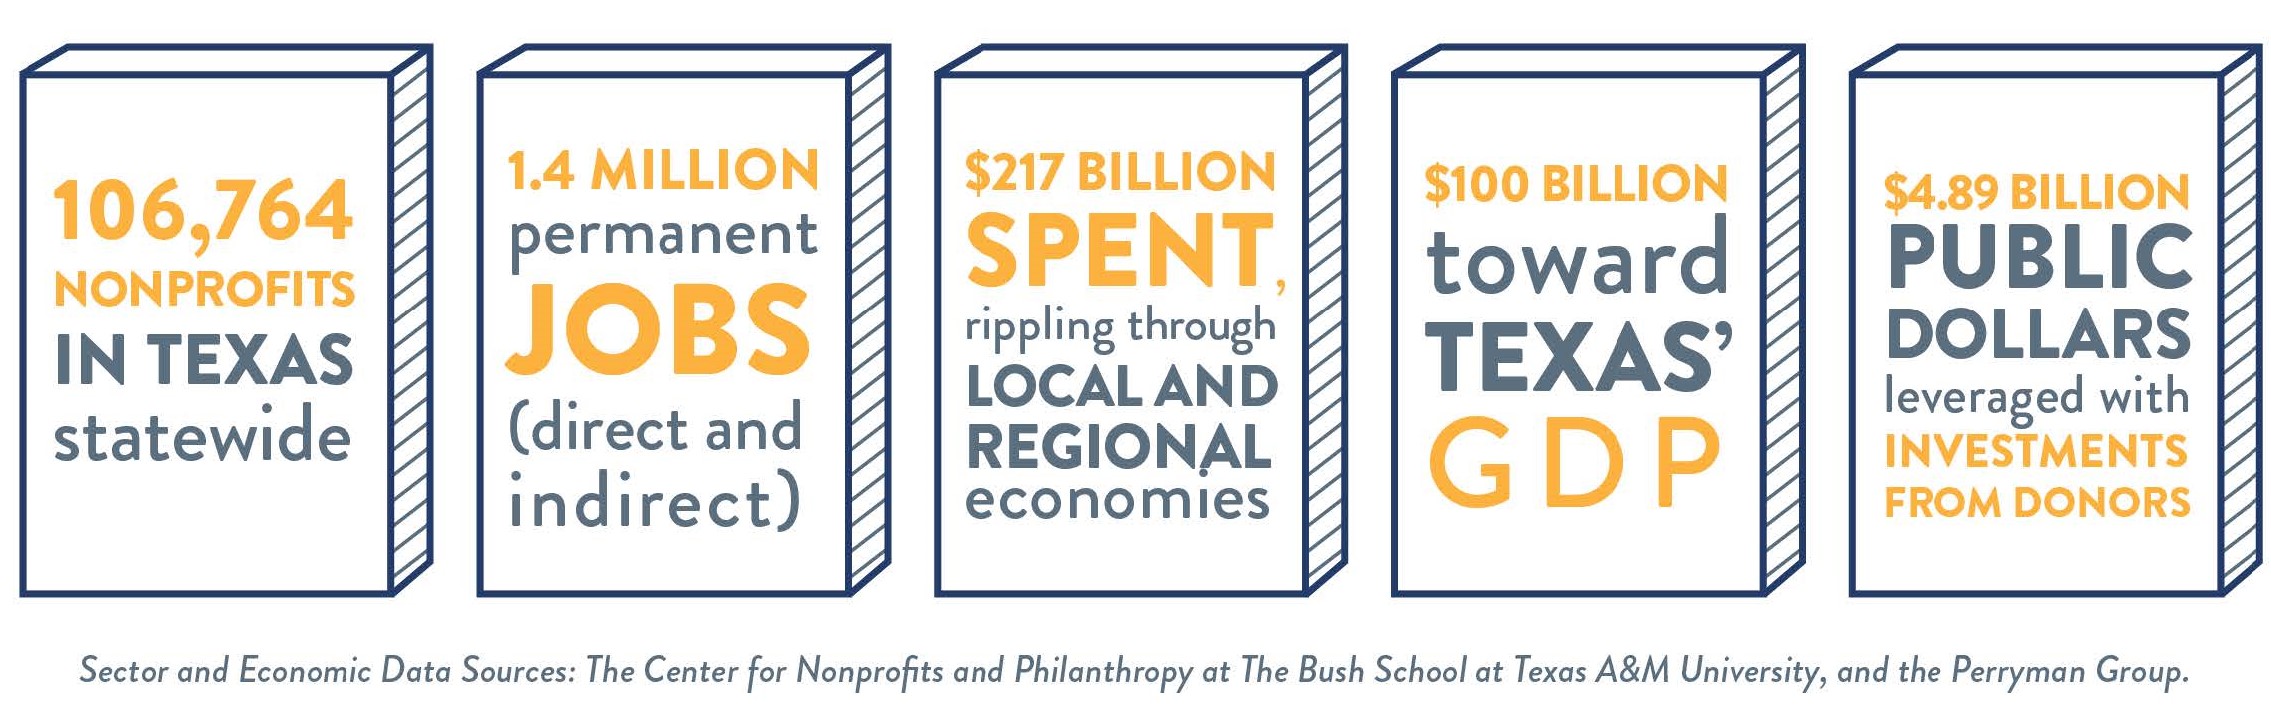 Economic Benefits Associated with Texas Nonprofits